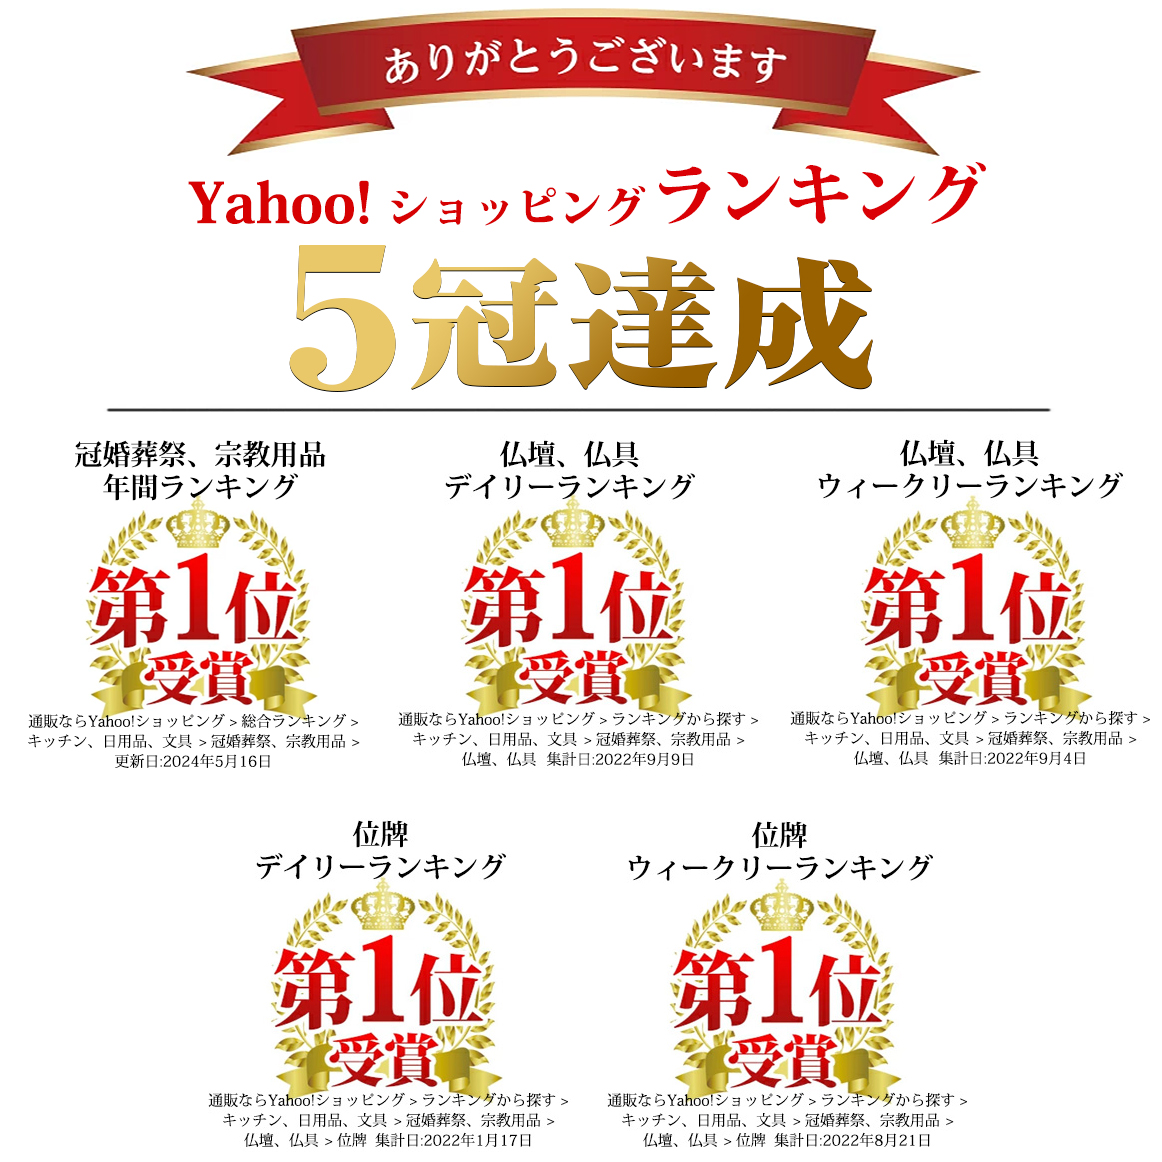 Yahooショッピングランキング1位!5冠達成!